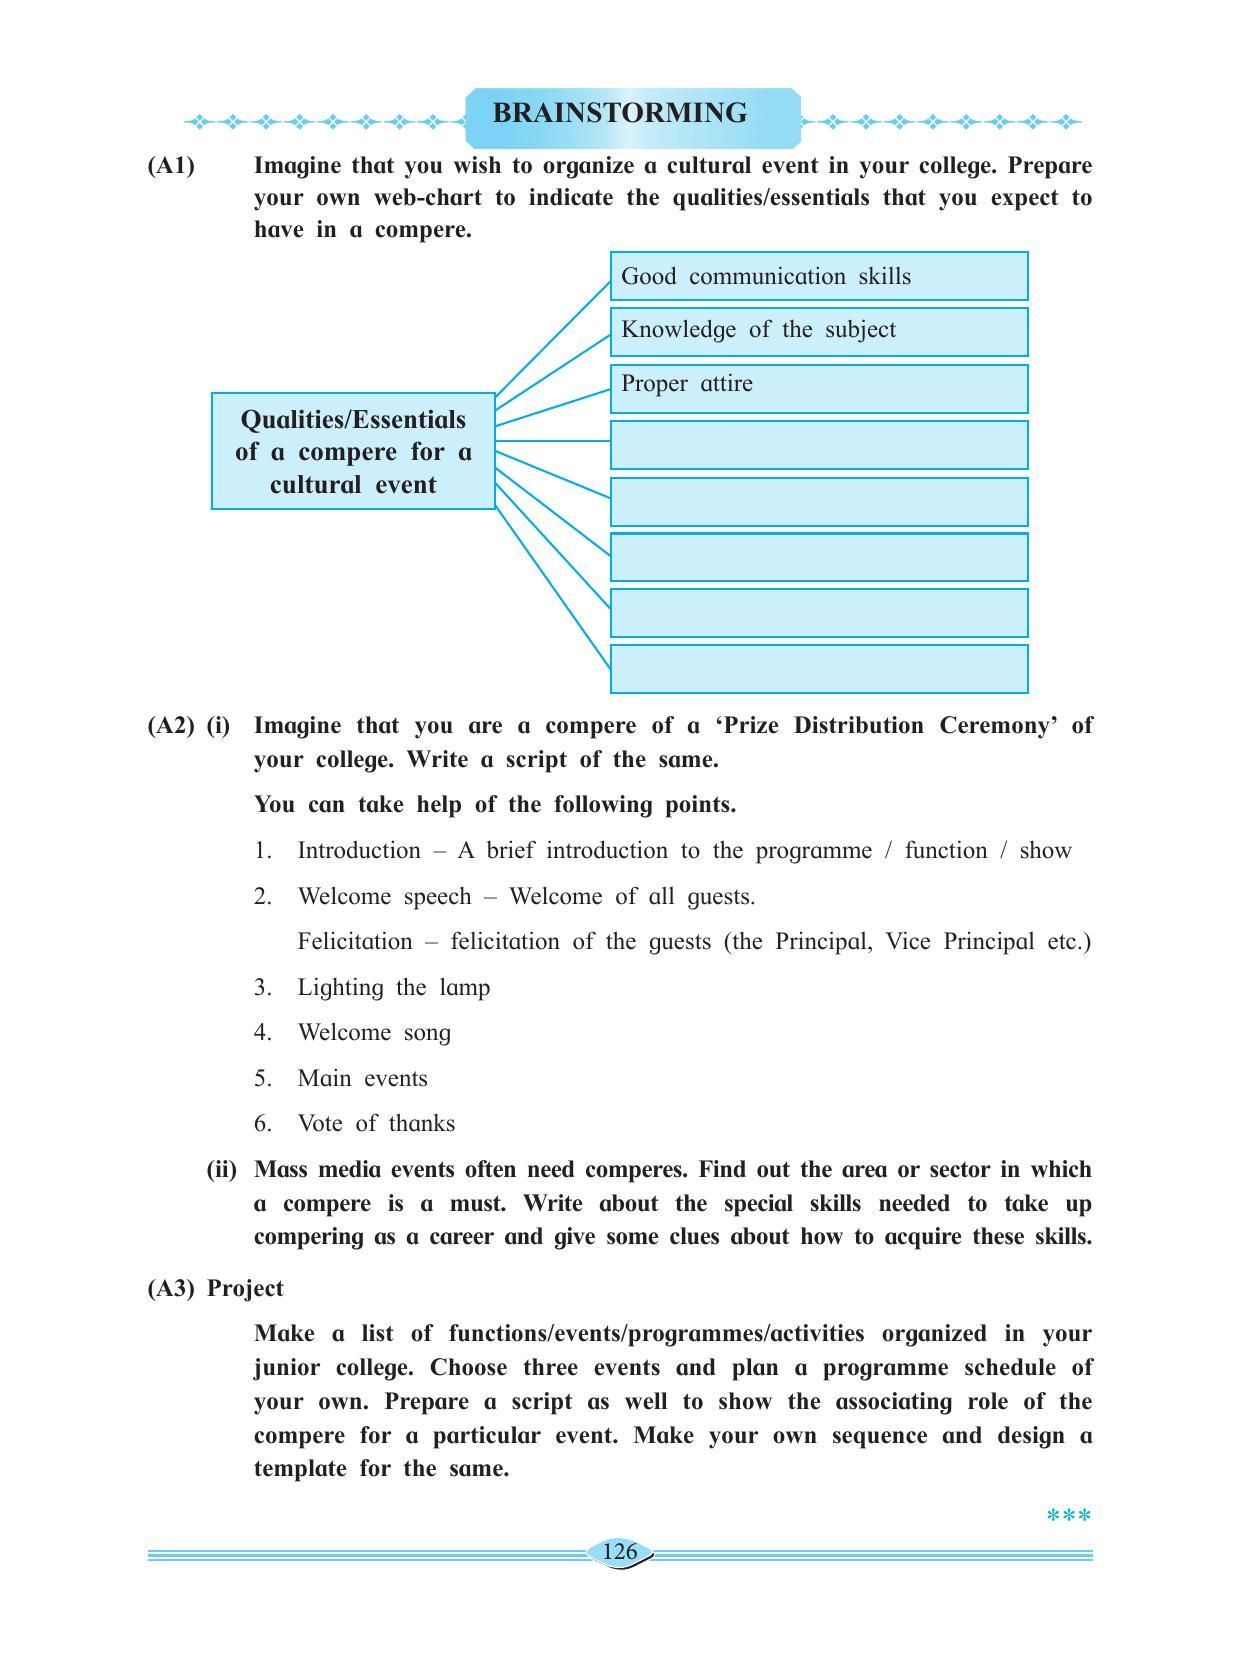 Maharashtra Board Class 11 English Textbook - Page 140